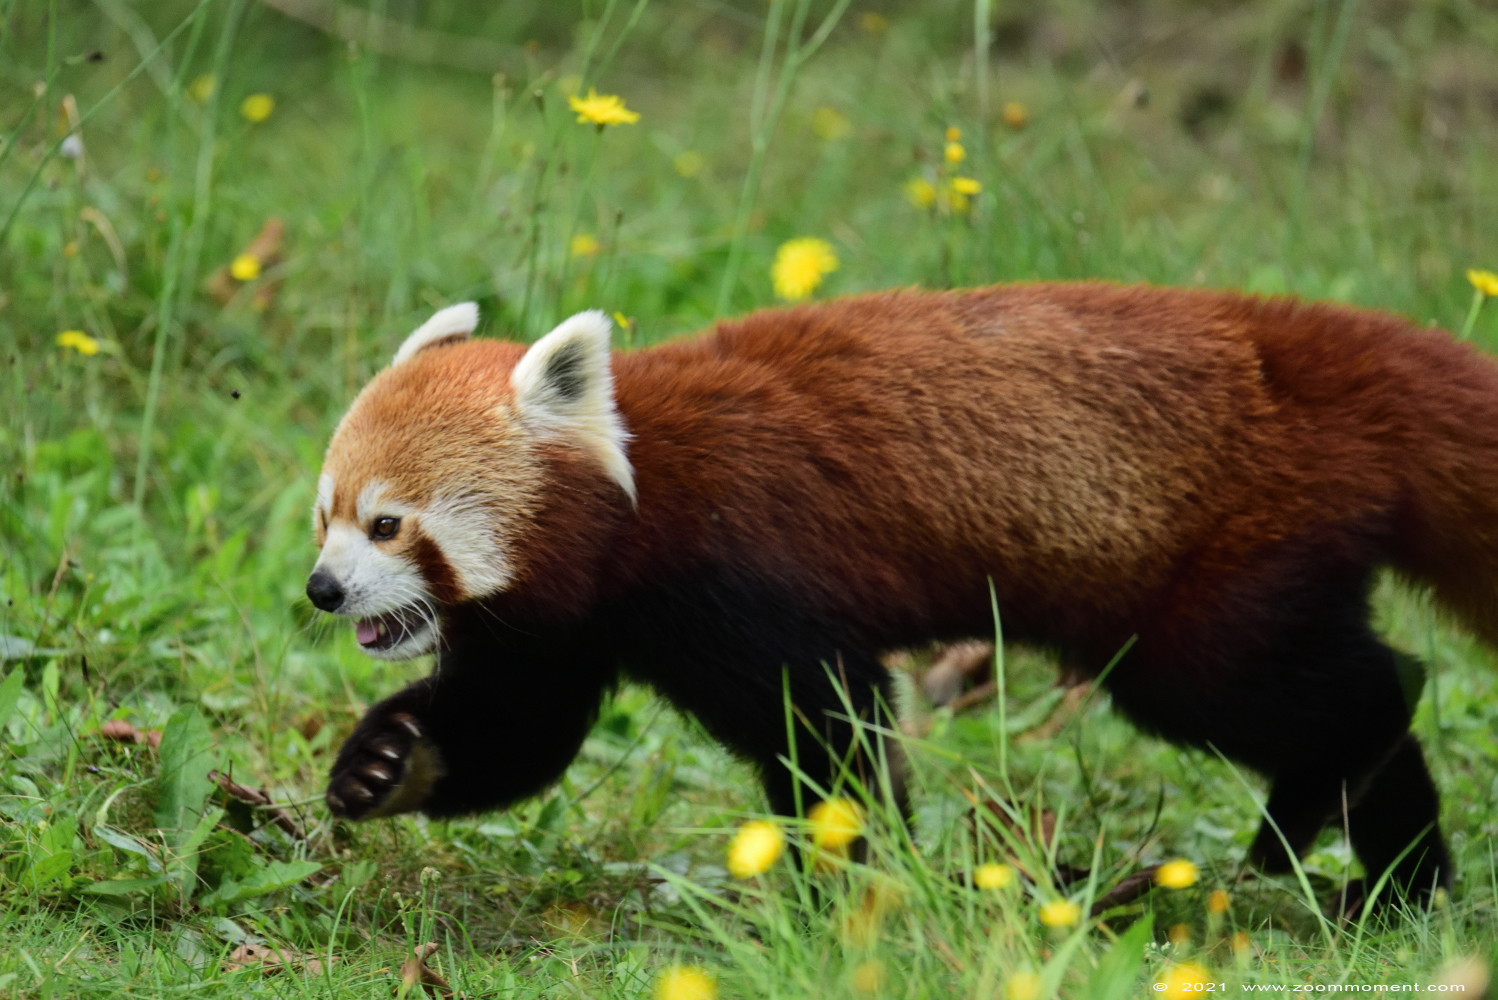 kleine of rode panda ( Ailurus fulgens ) lesser or red panda
Trefwoorden: Safaripark Beekse Bergen kleine rode panda Ailurus fulgens lesser red panda